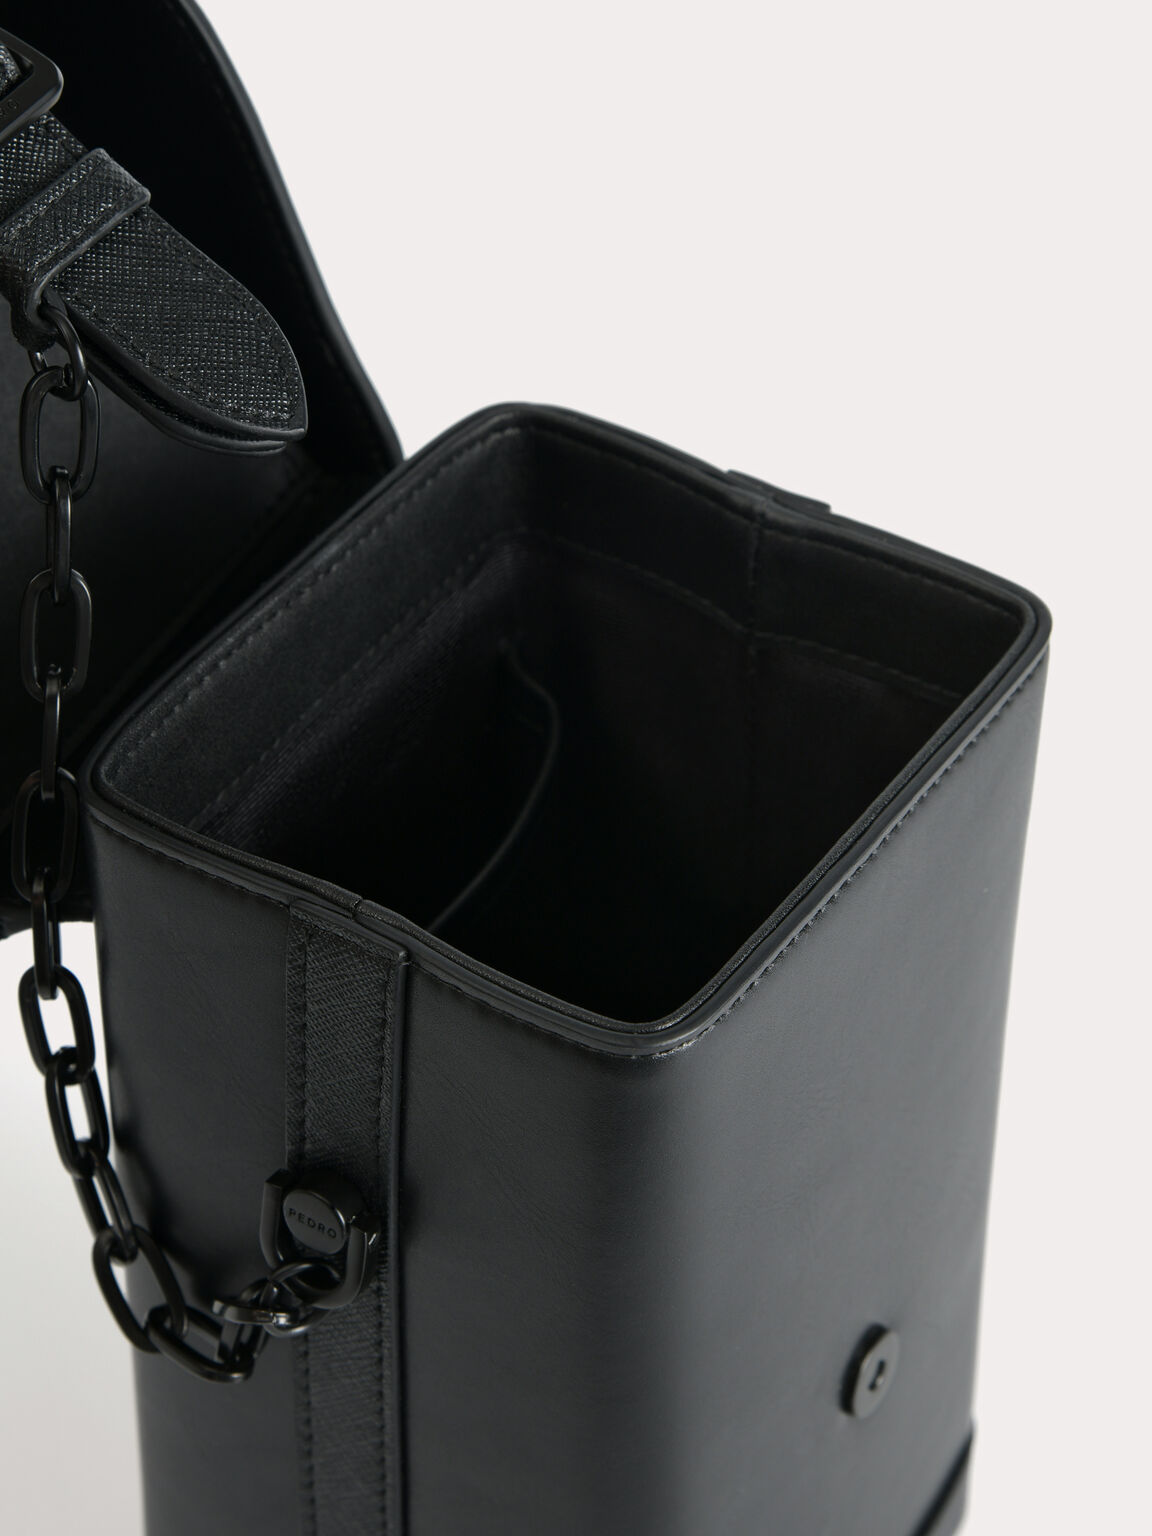 Boxy Chain Crossbody Bag, Black